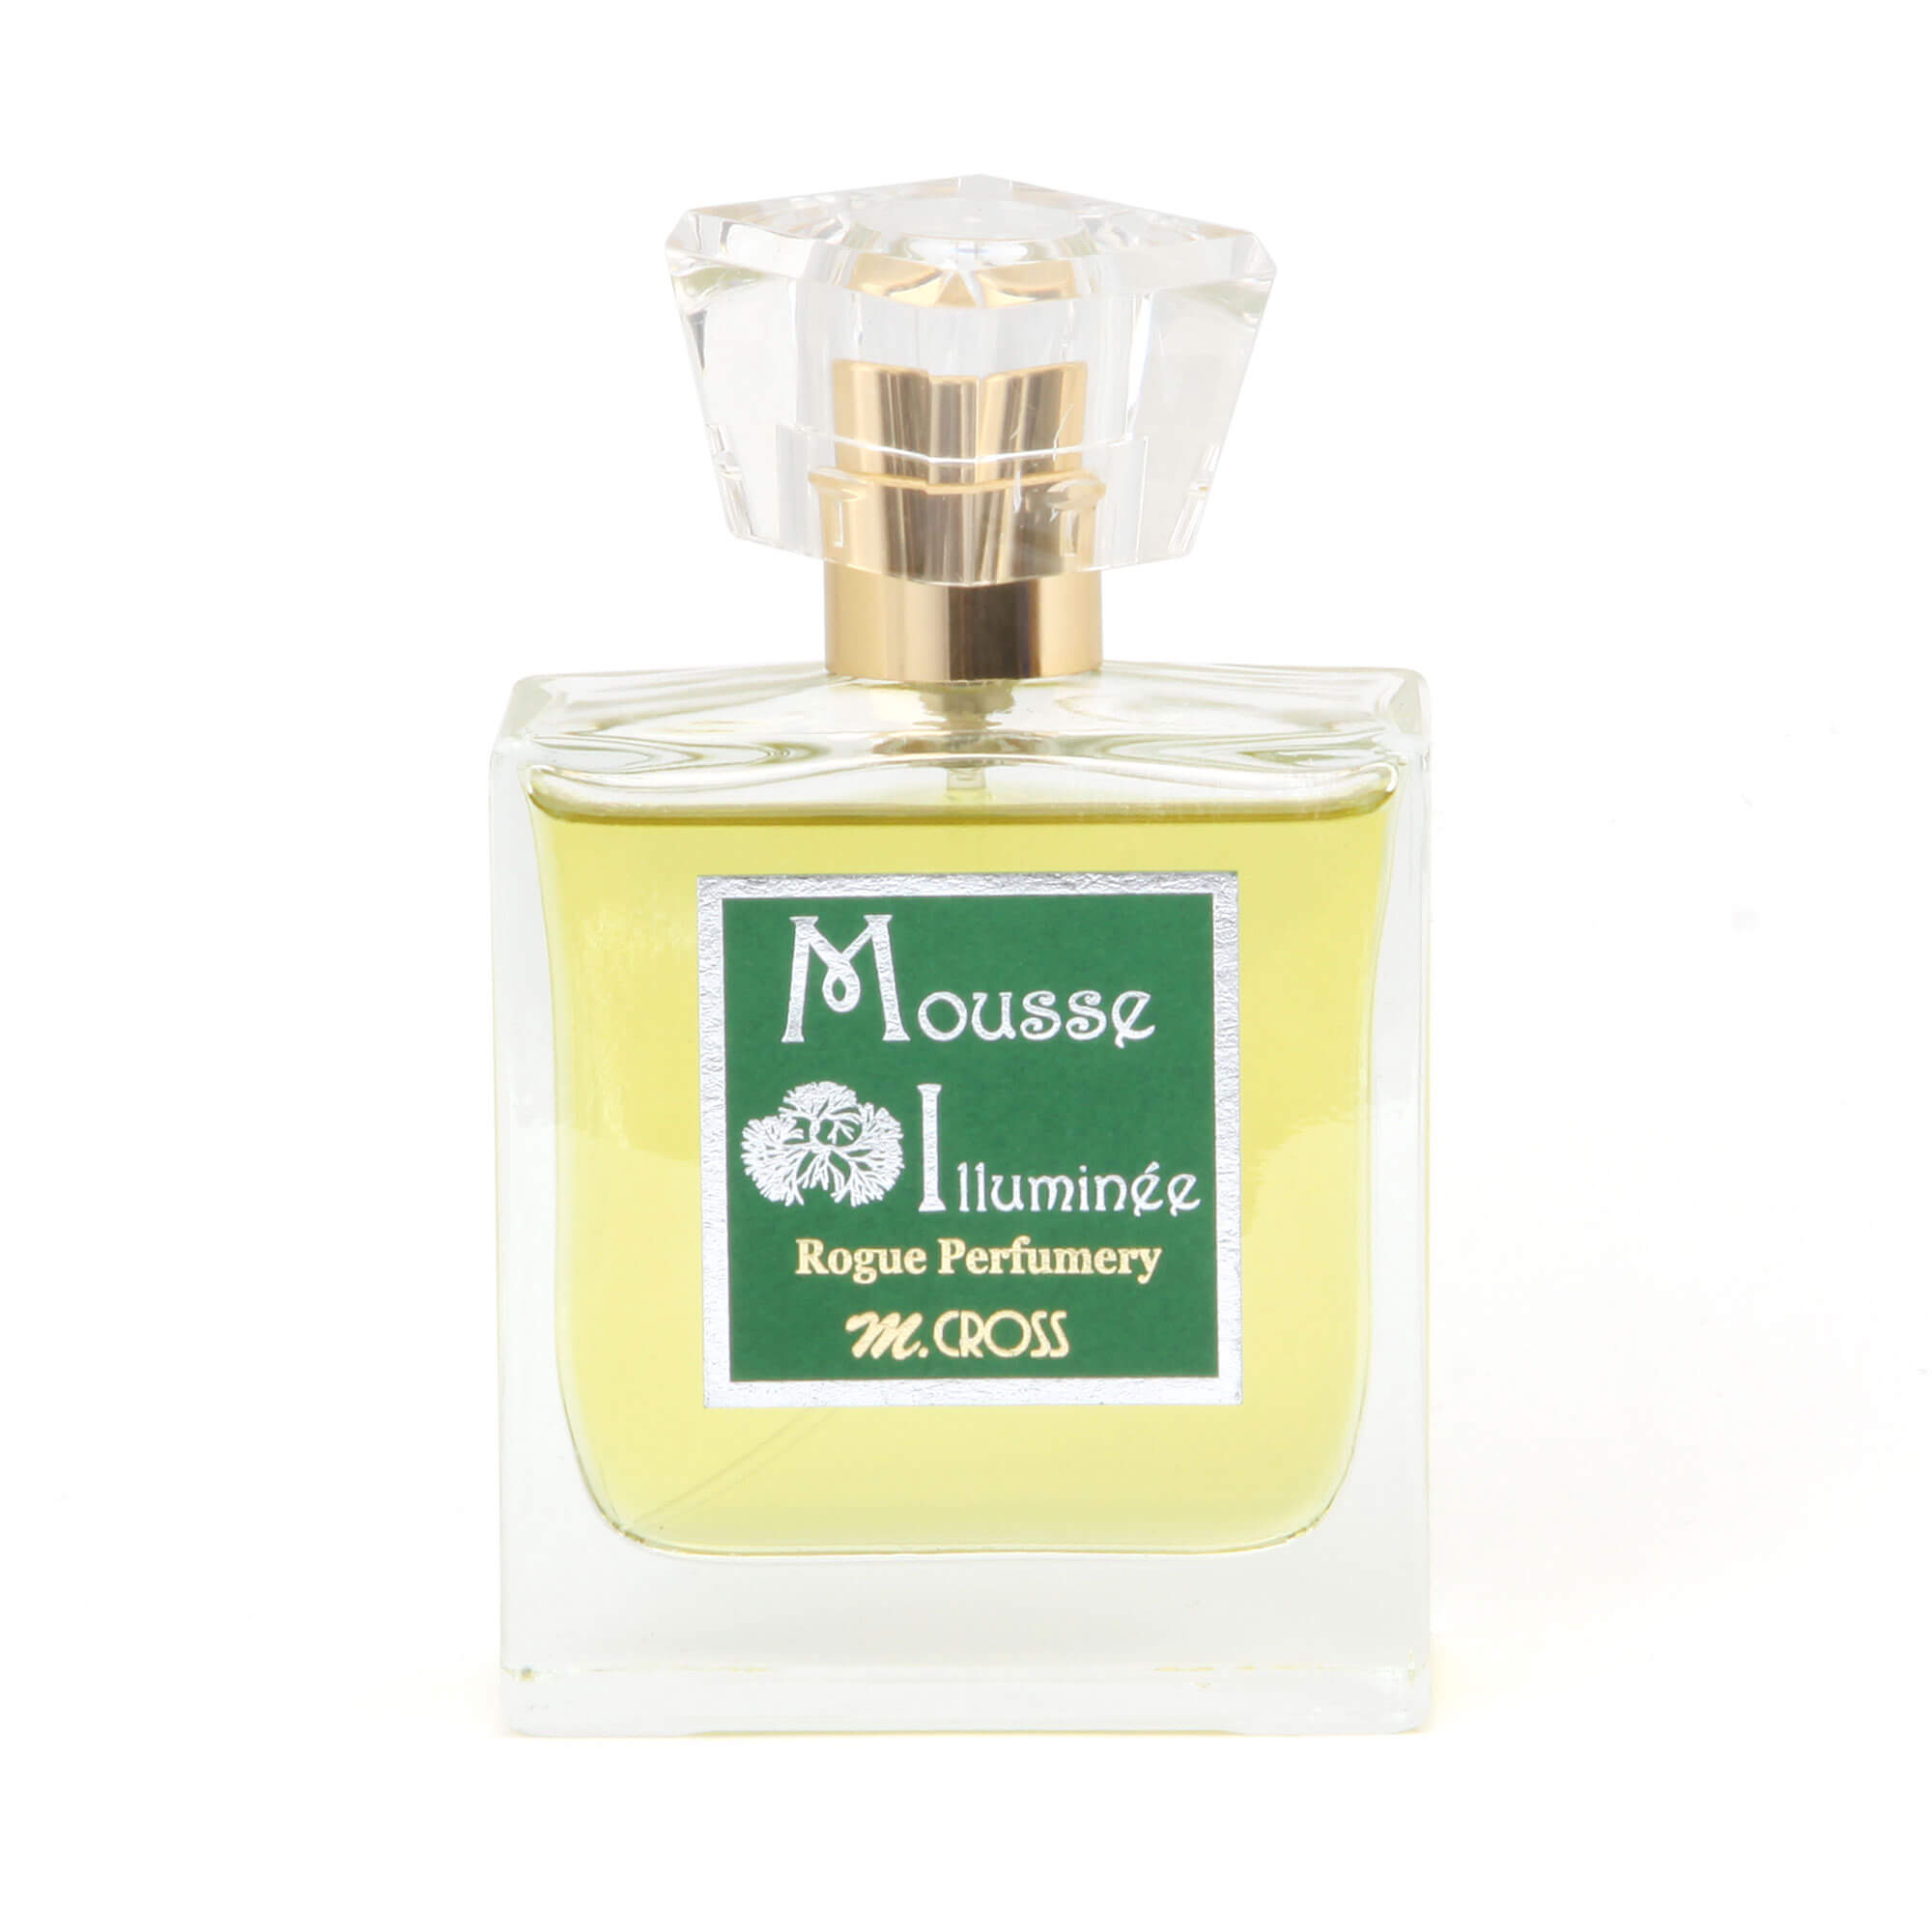 Rogue Perfumery Mousse Illuminee Eau De Toilette